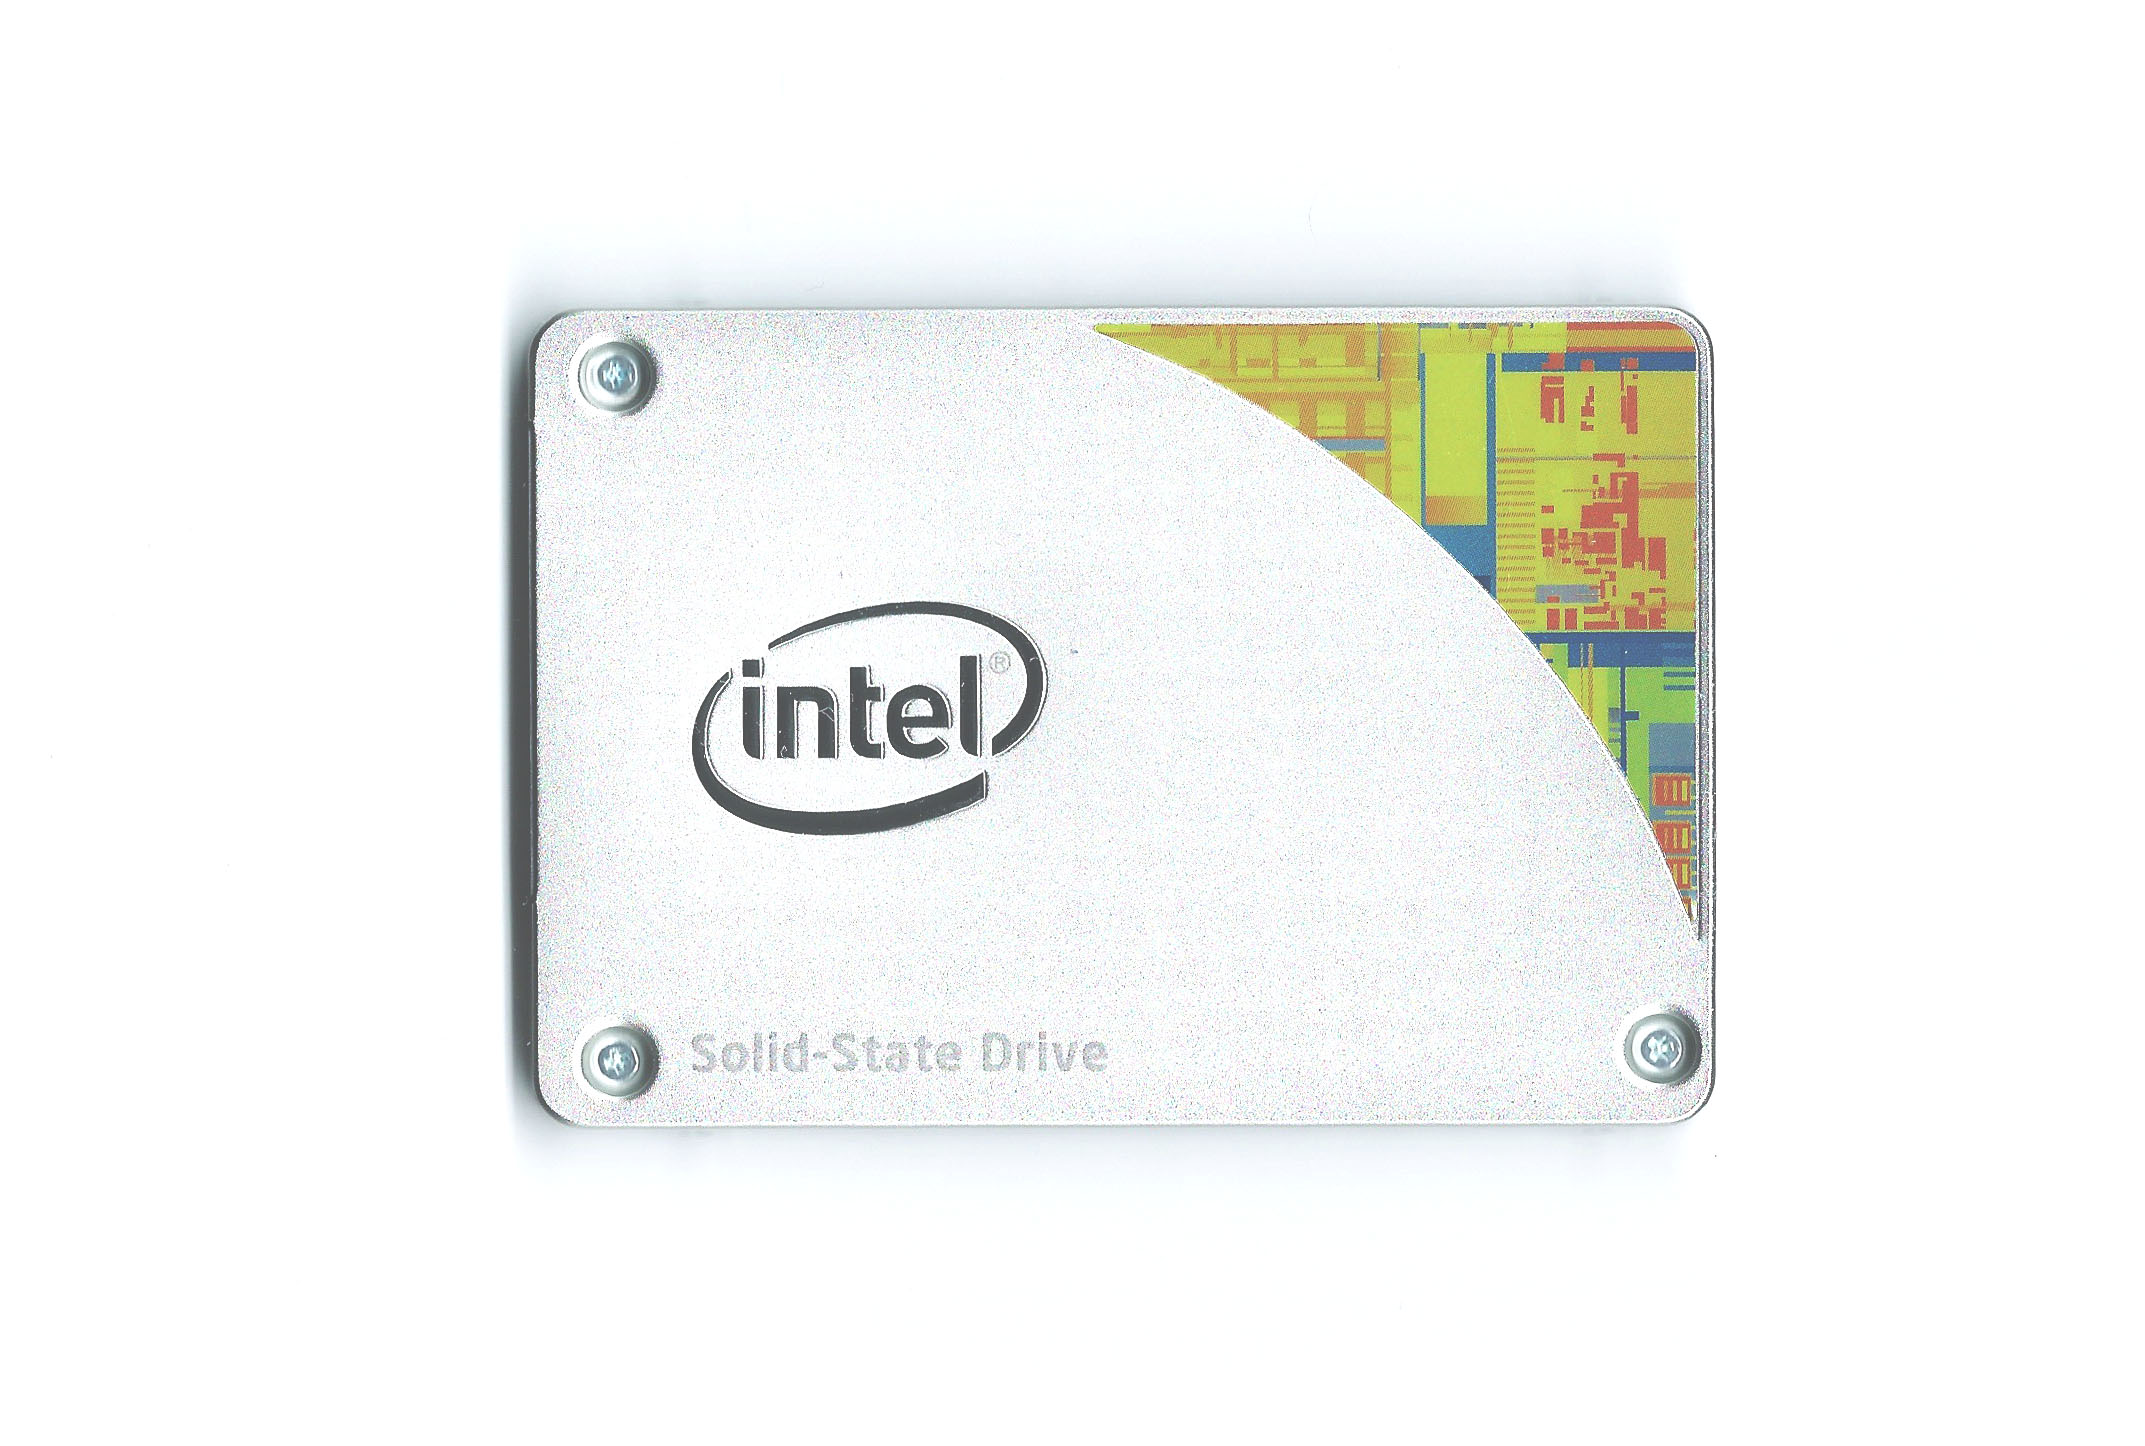 Intel SSD 530 (240GB) Review